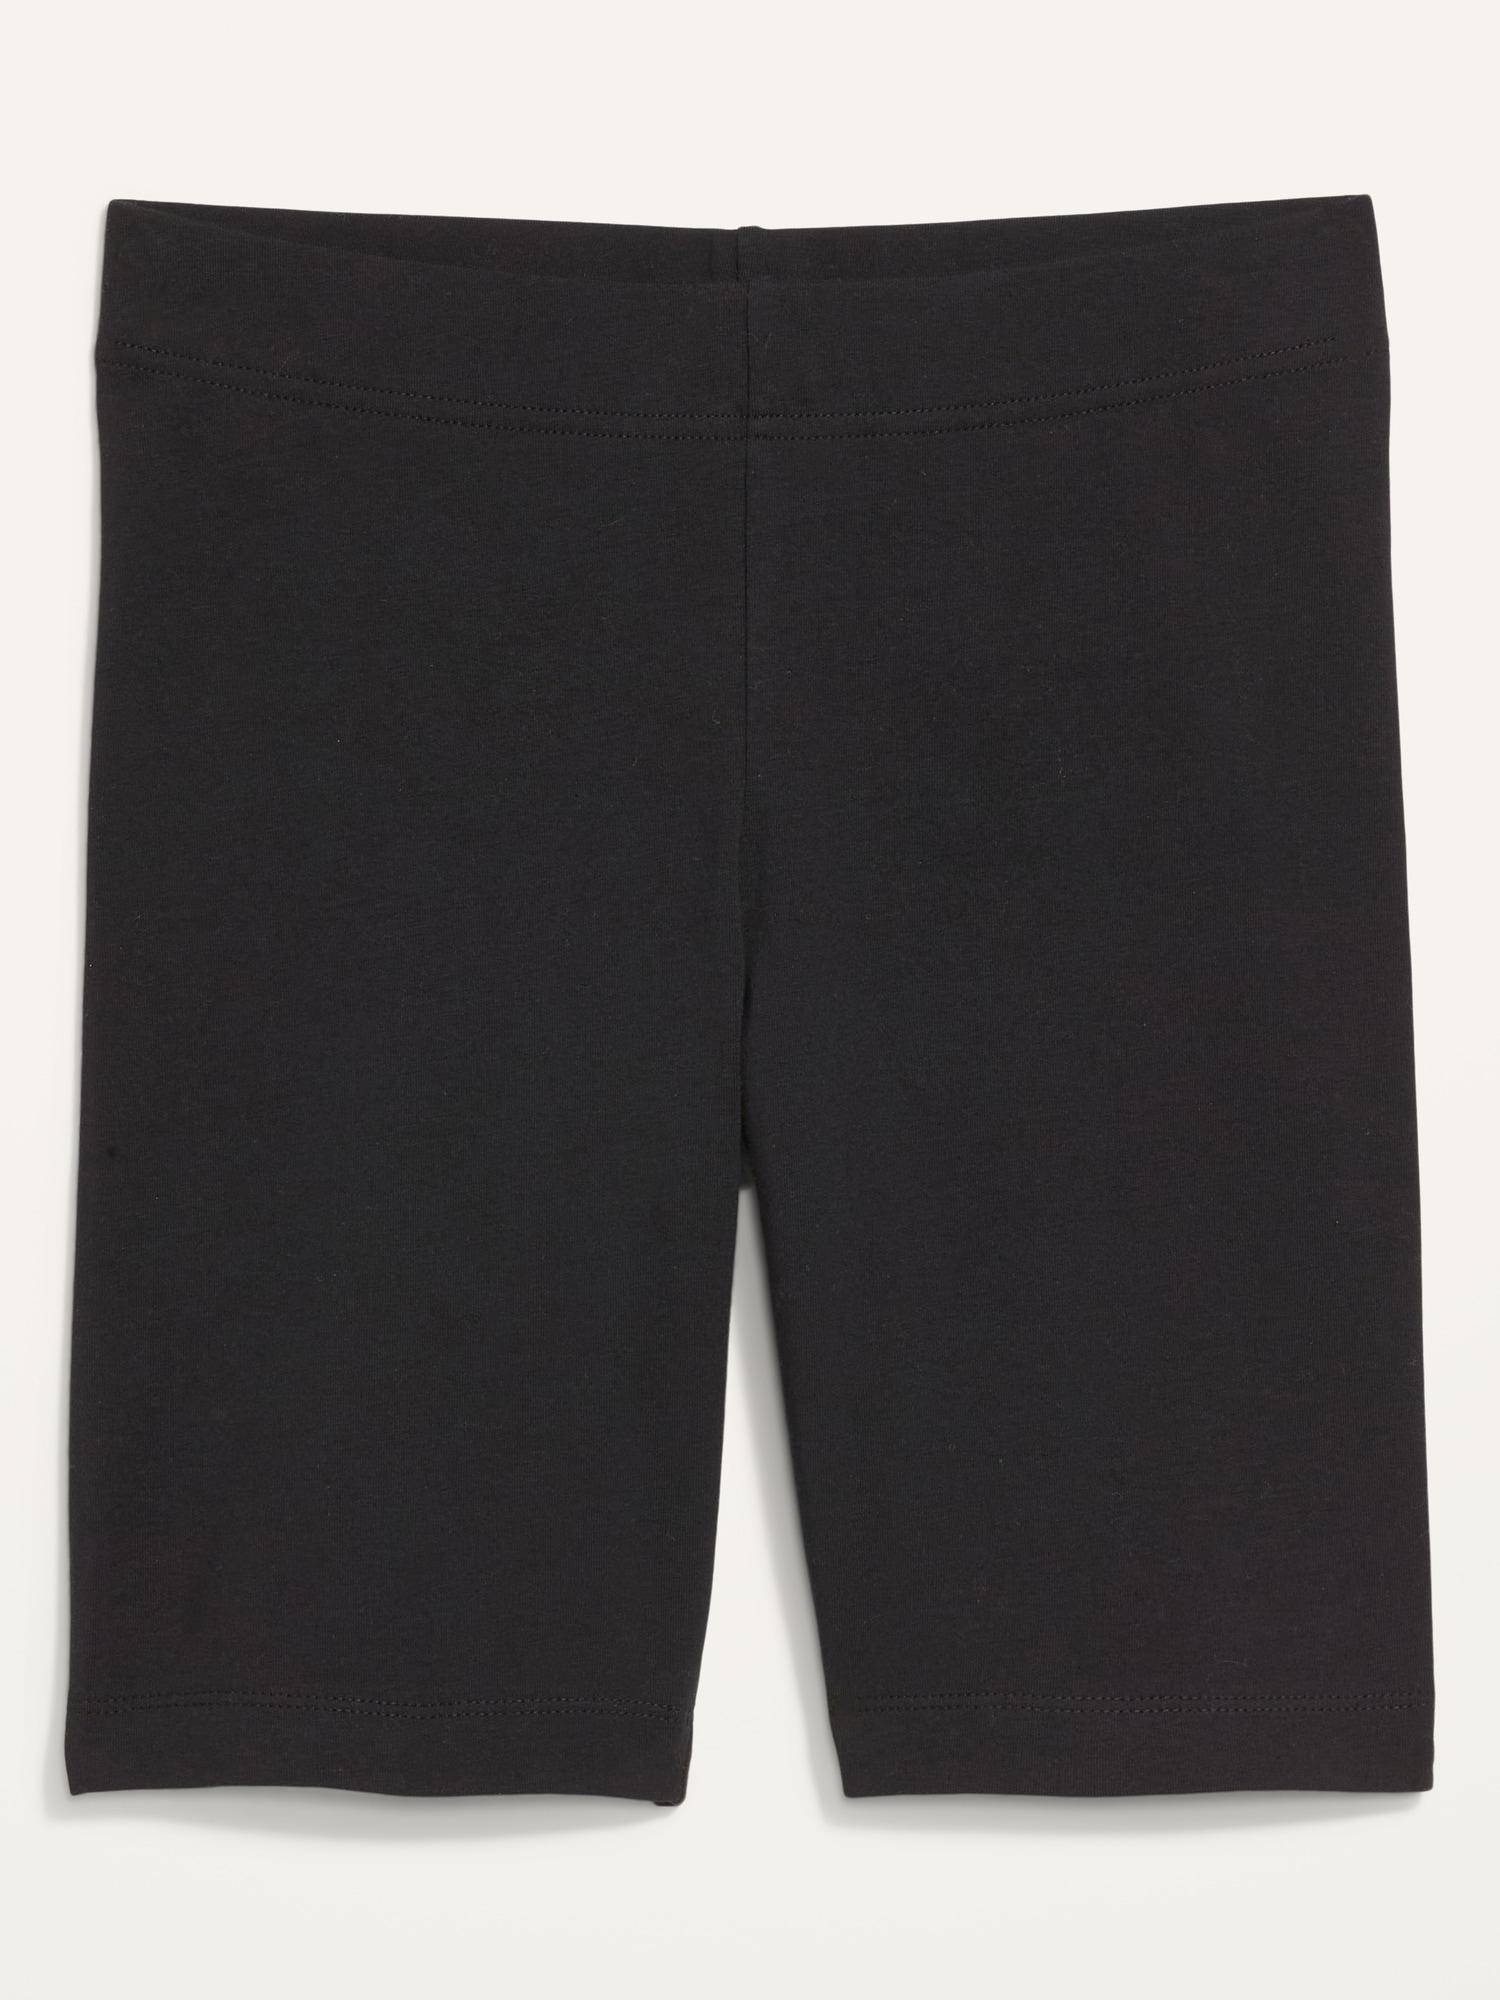 Skin Biker Shorts (8 in. inseam) - Black Camo